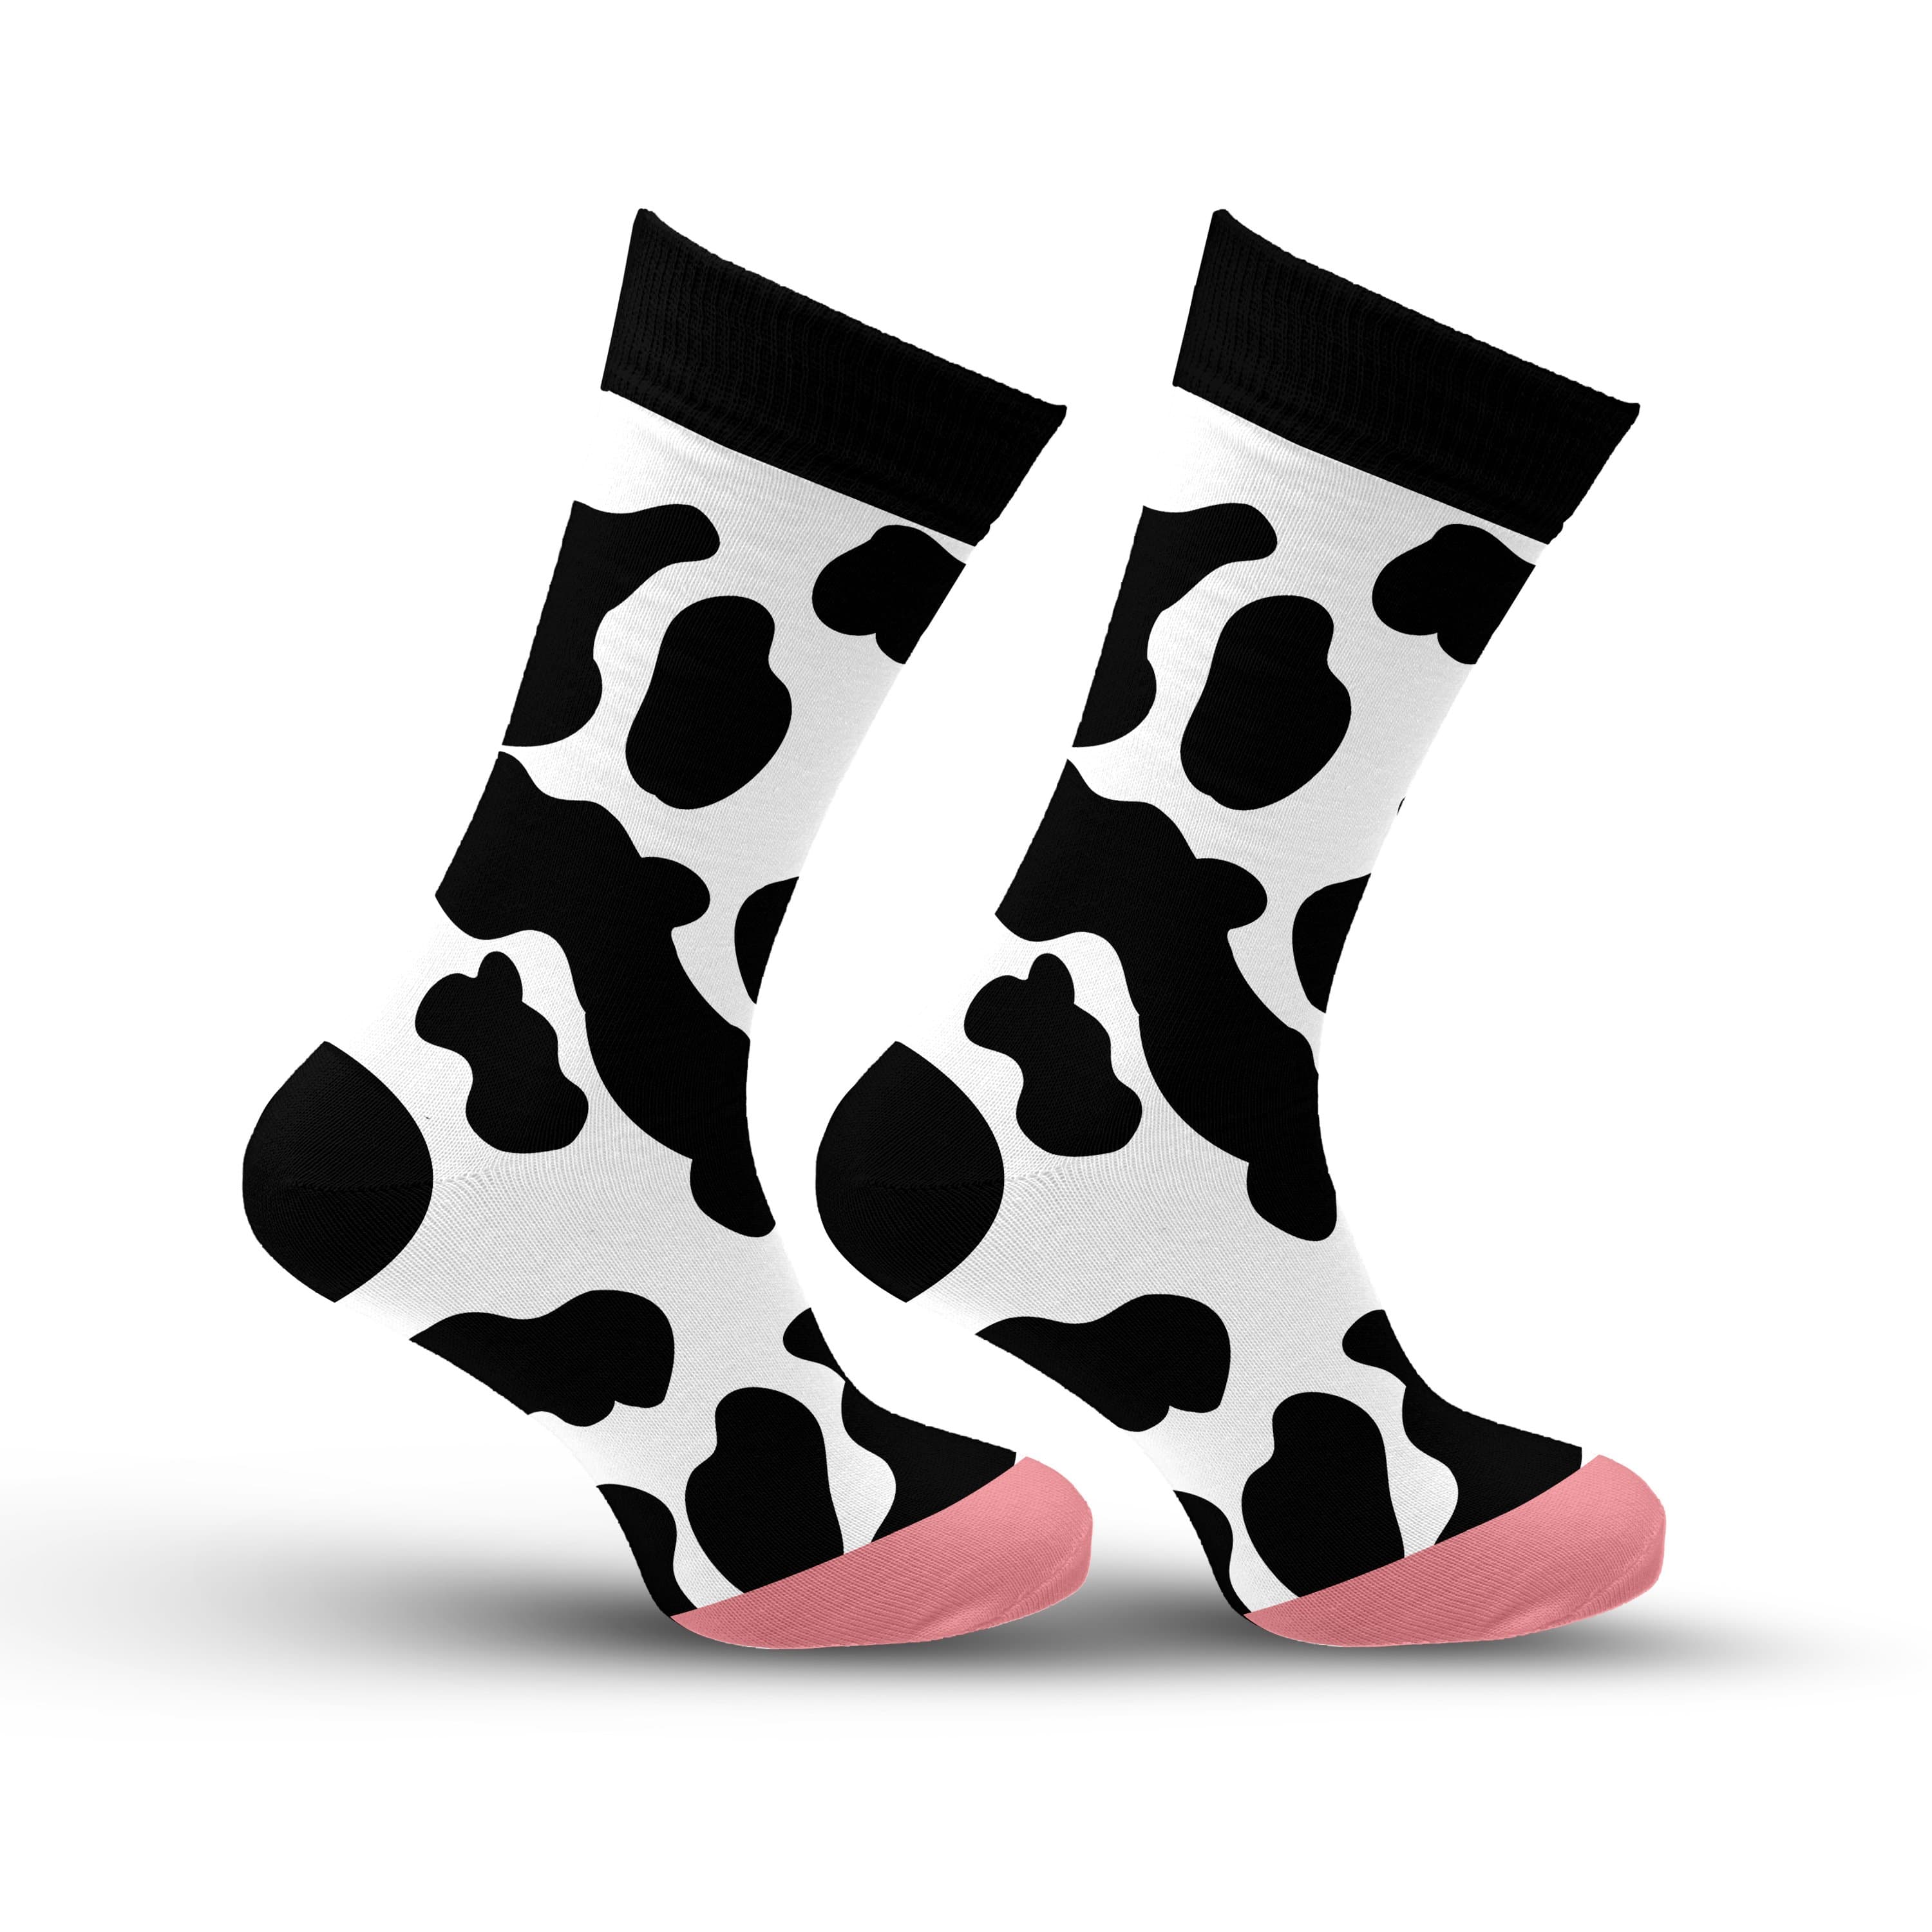 "Cow" Socks